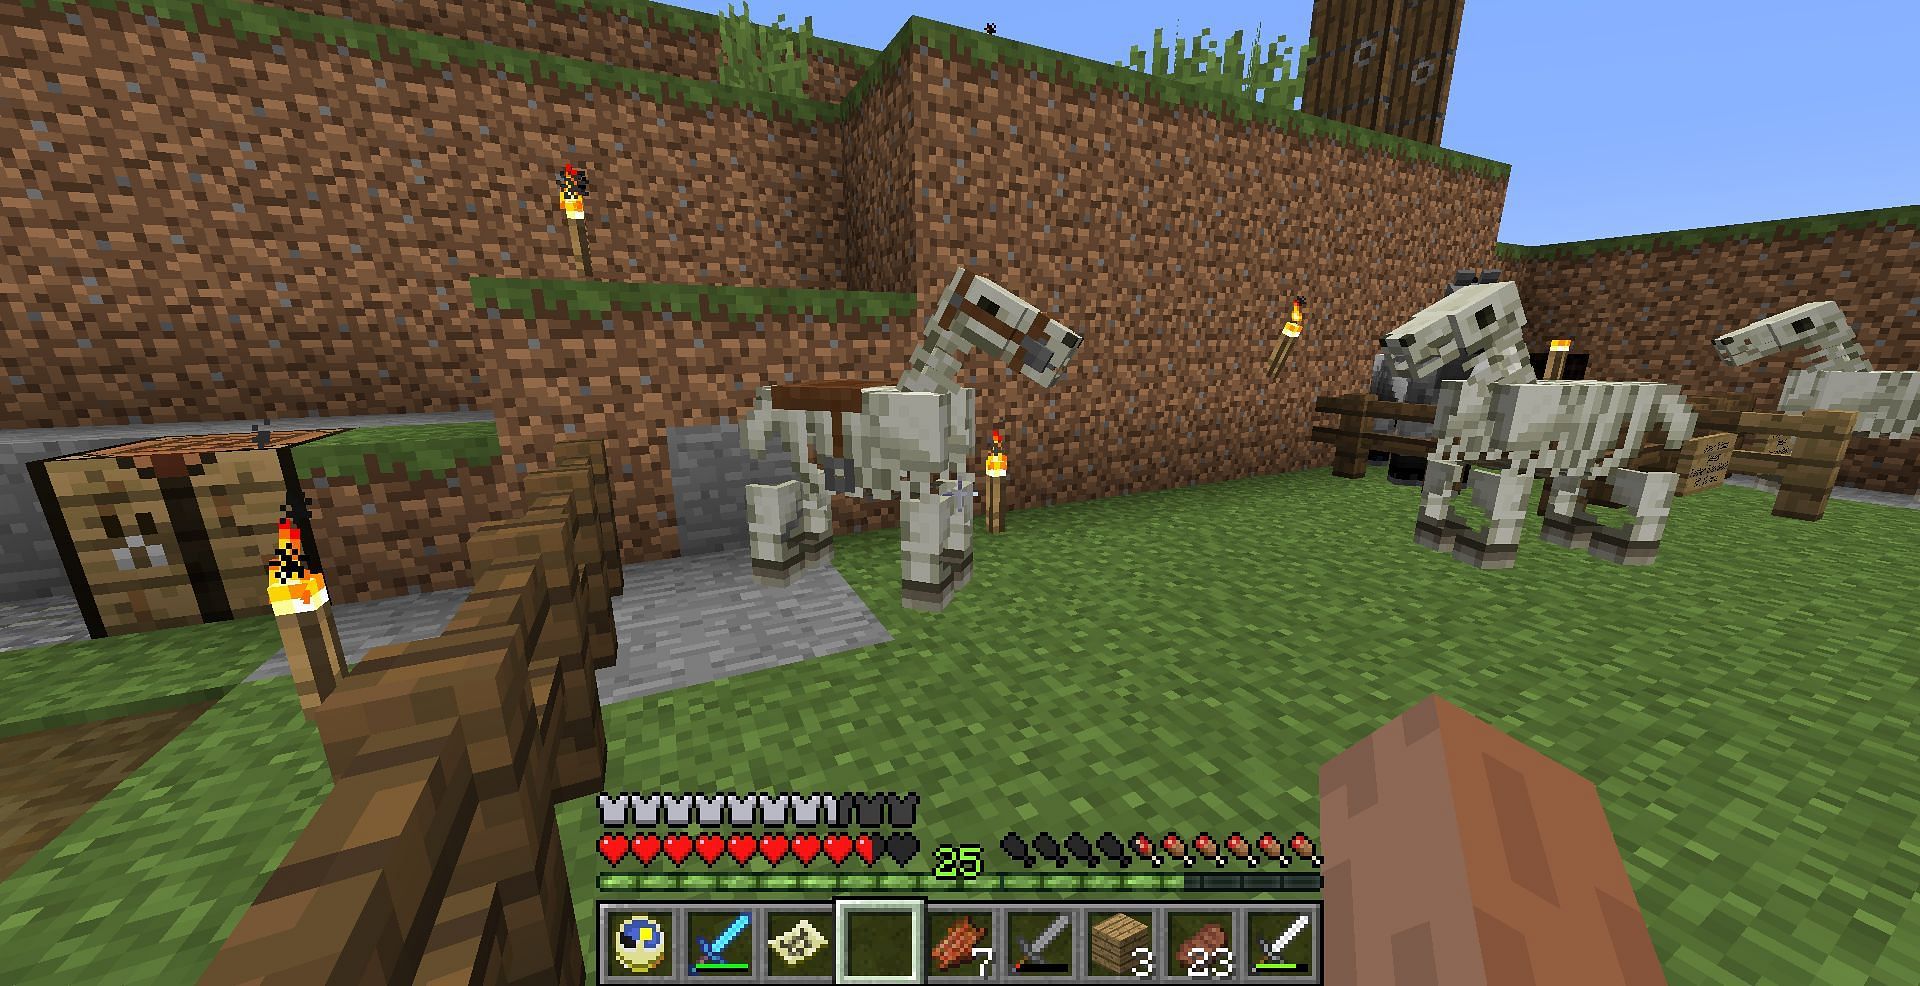 Tamed Skeleton Horse (Image via Minecraft)